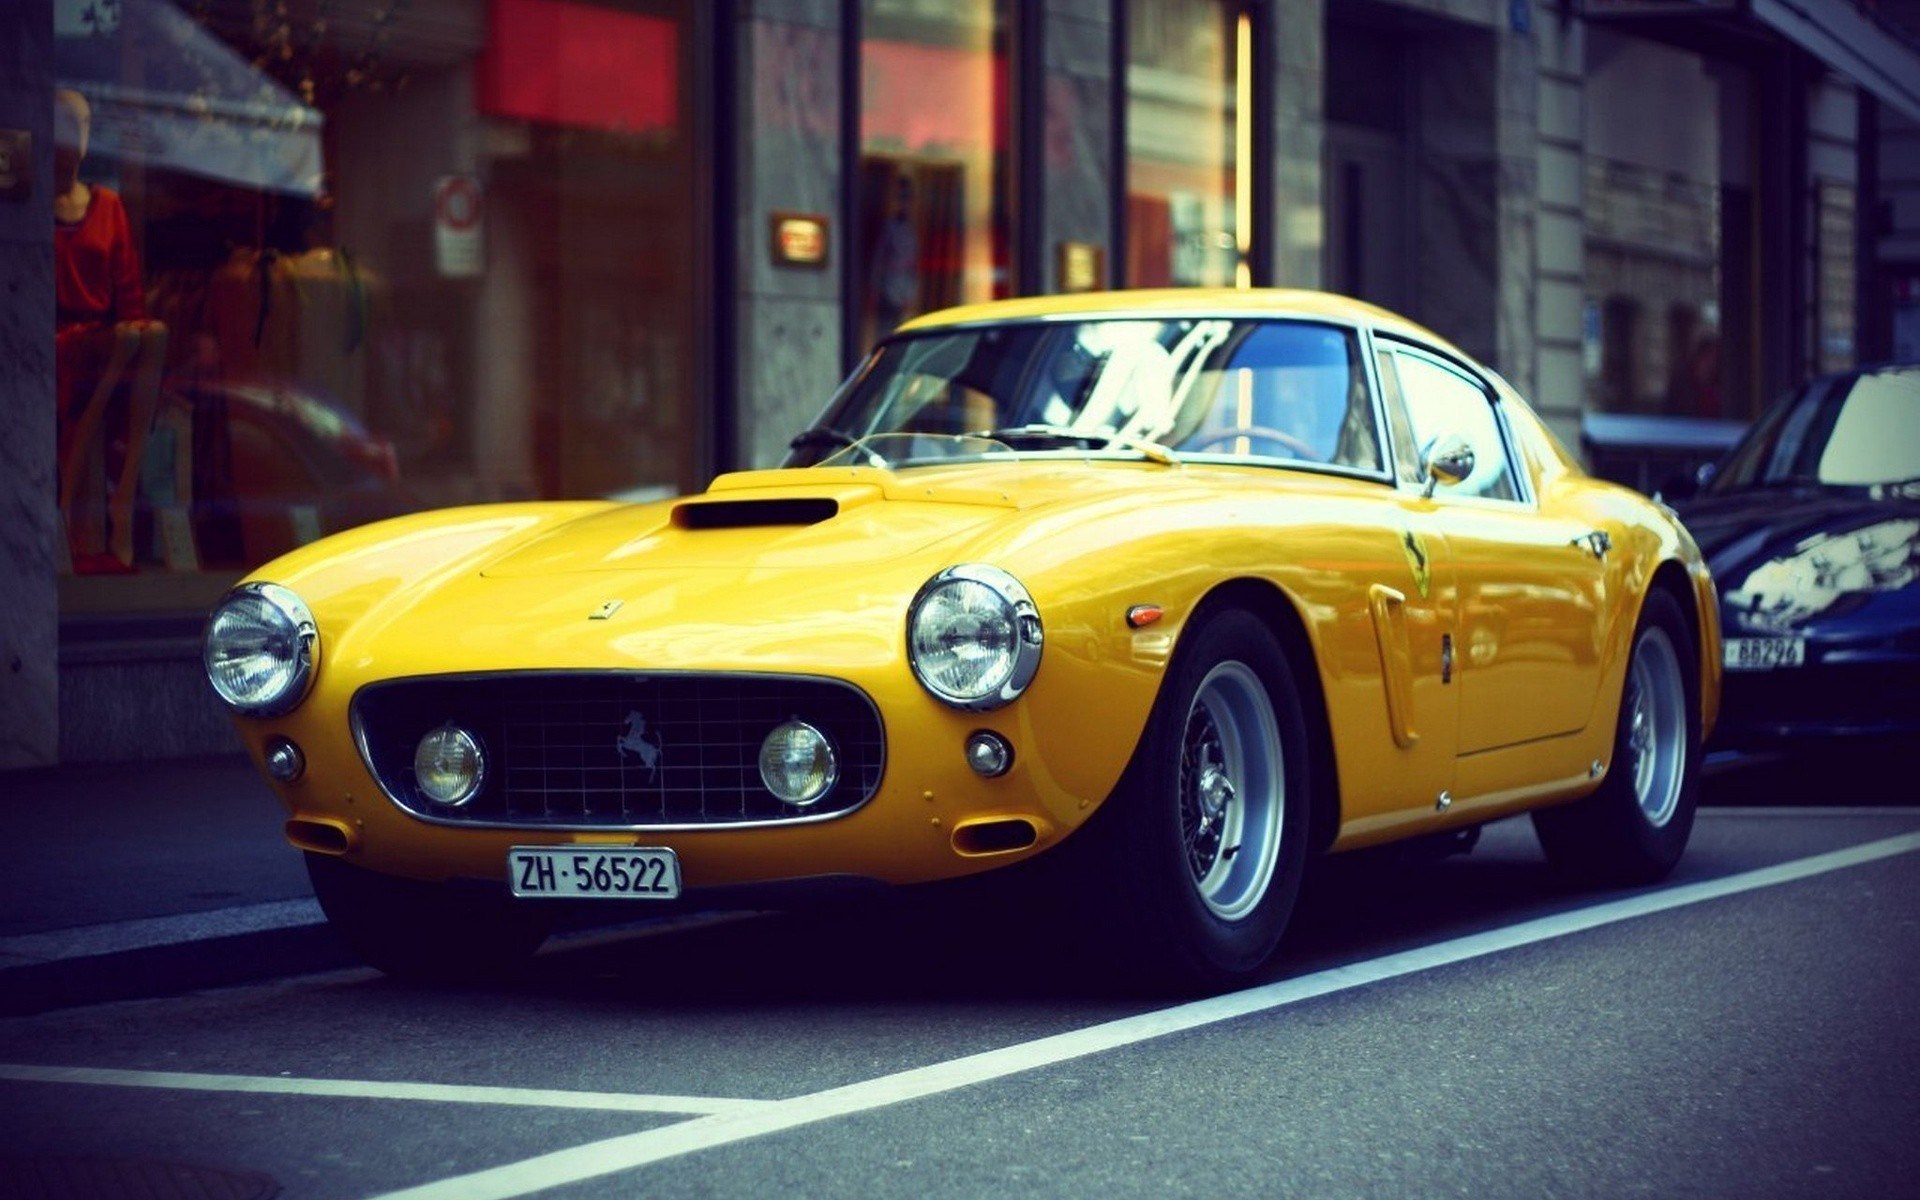 Ferrari, classic car, photo, street, city, london, hd, wallpaper